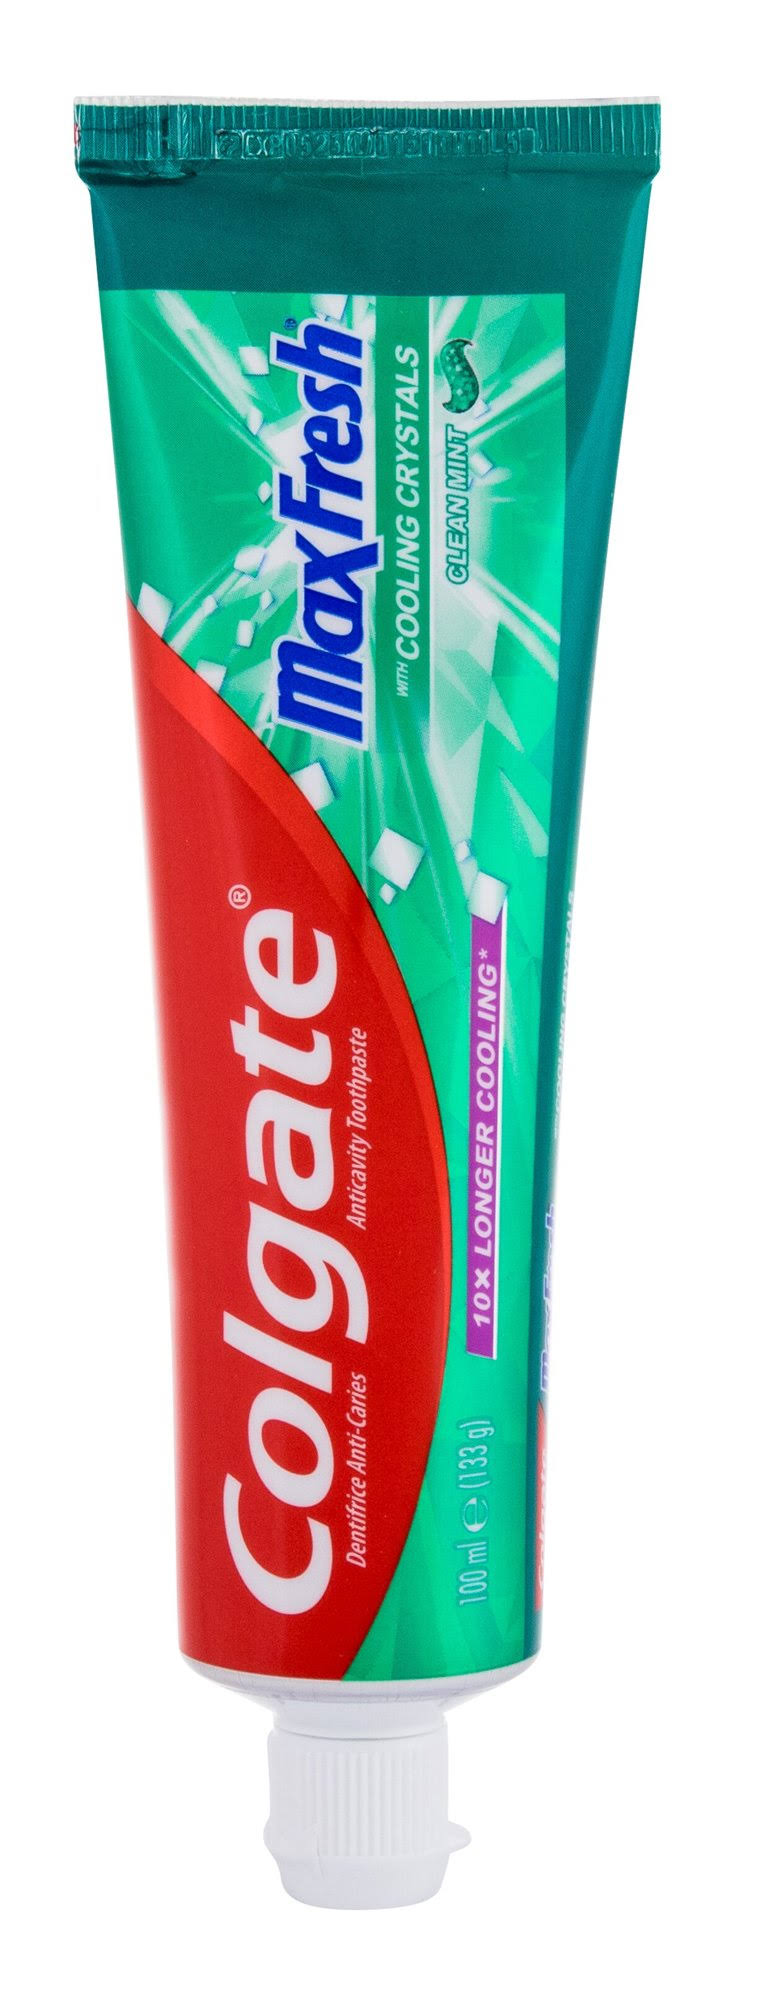 Colgate Fluoride Max Fresh Toothpaste